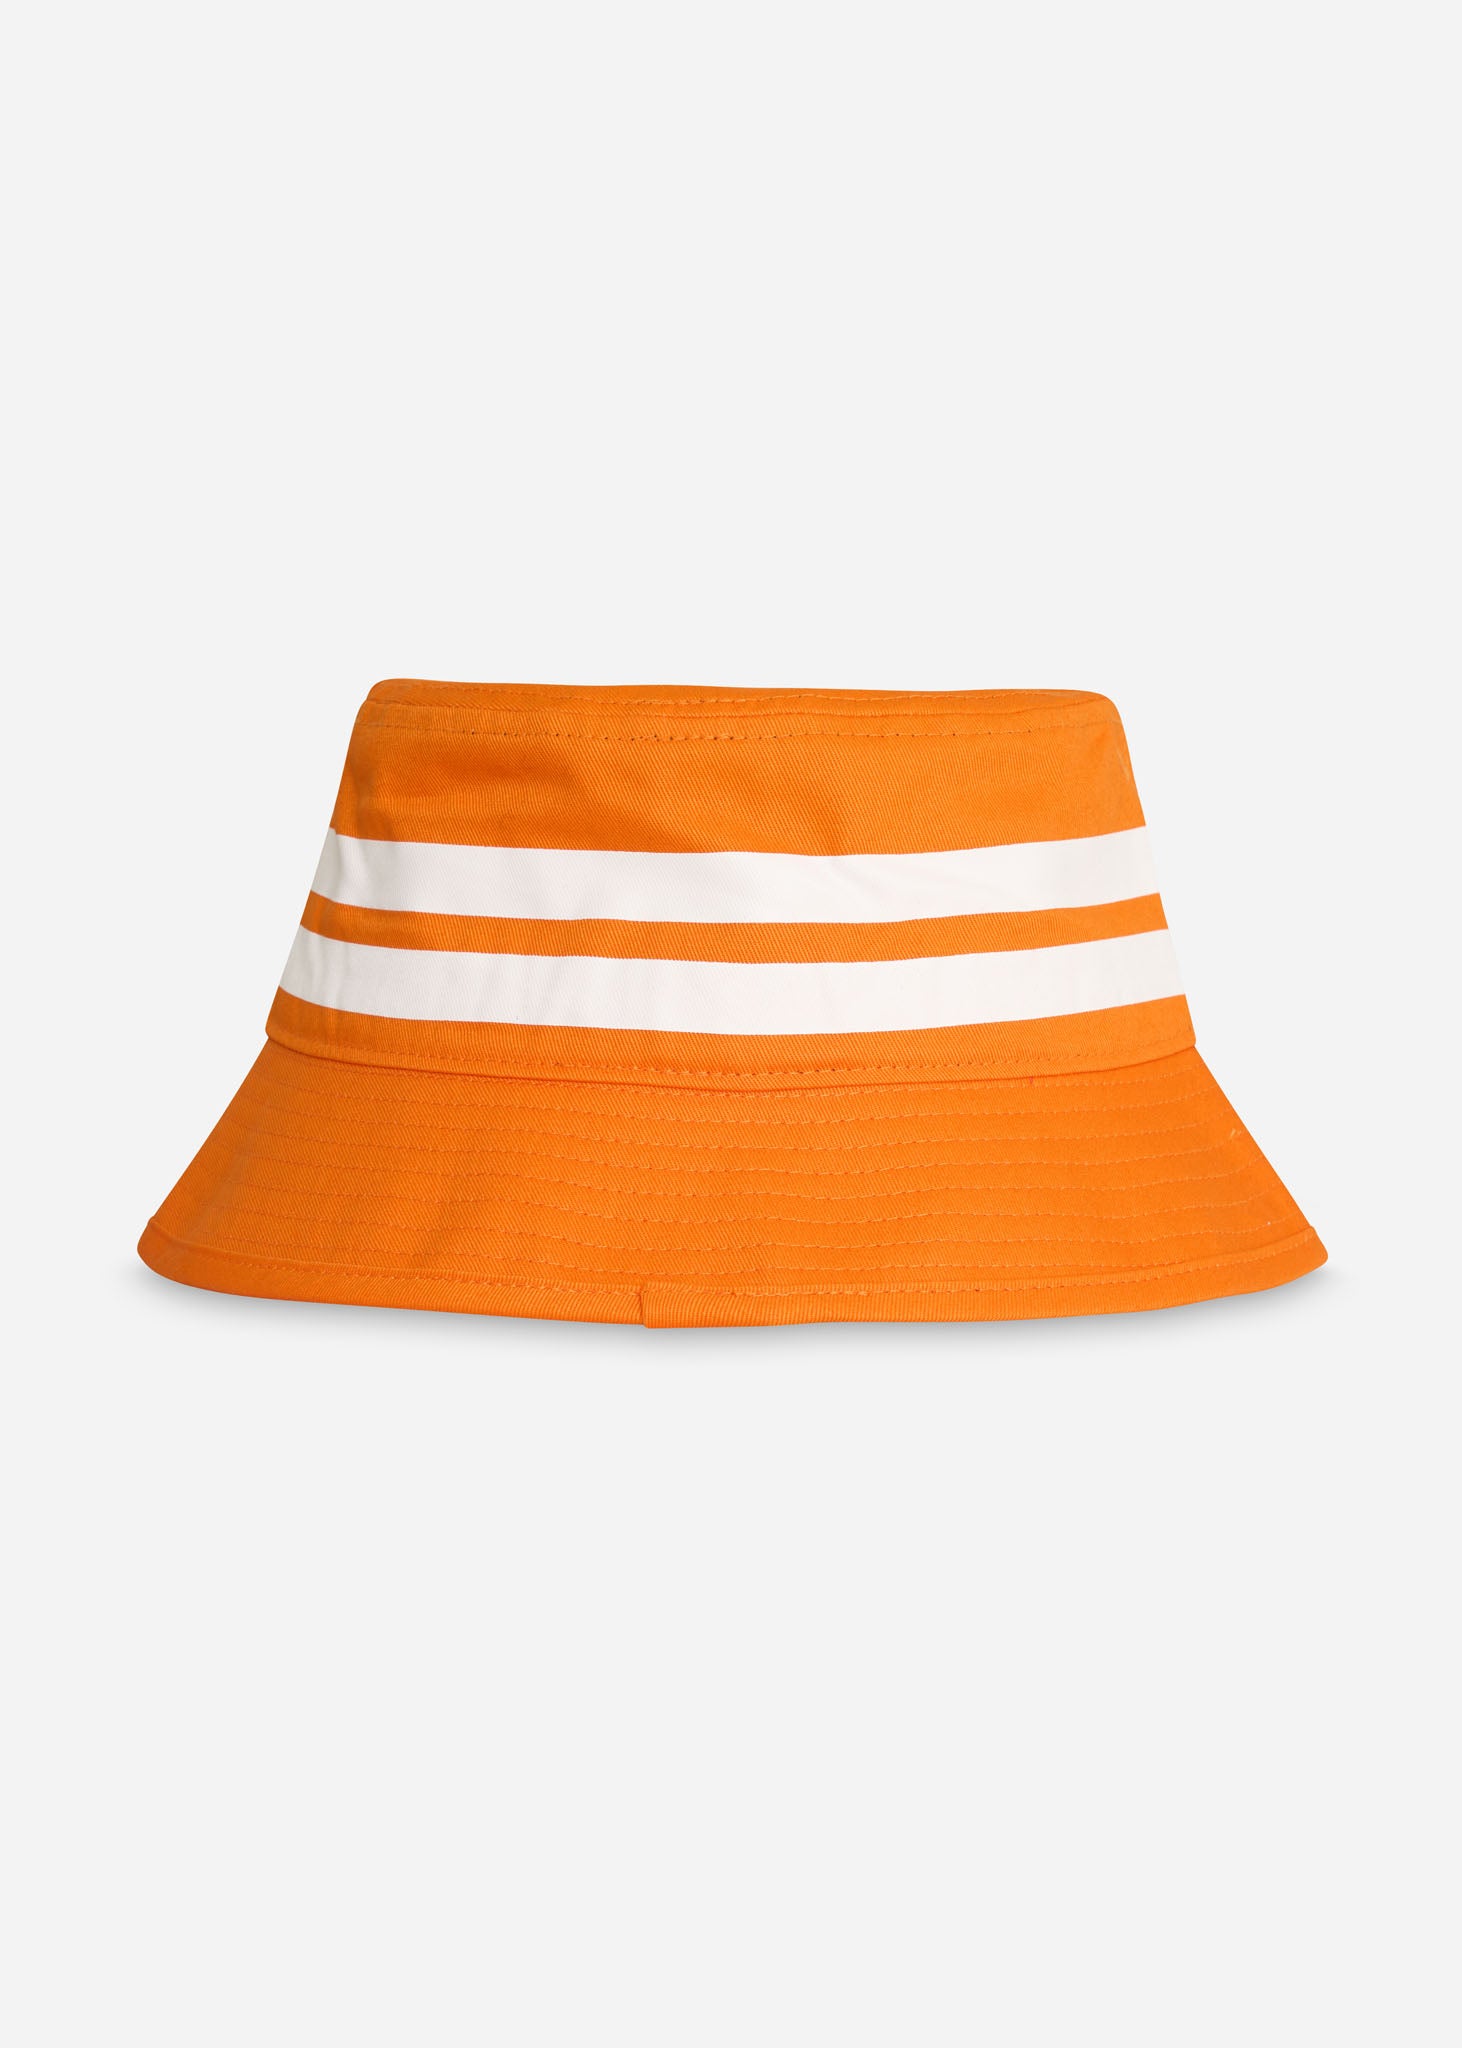 Ellesse Bucket Hats  Lanori - orange 